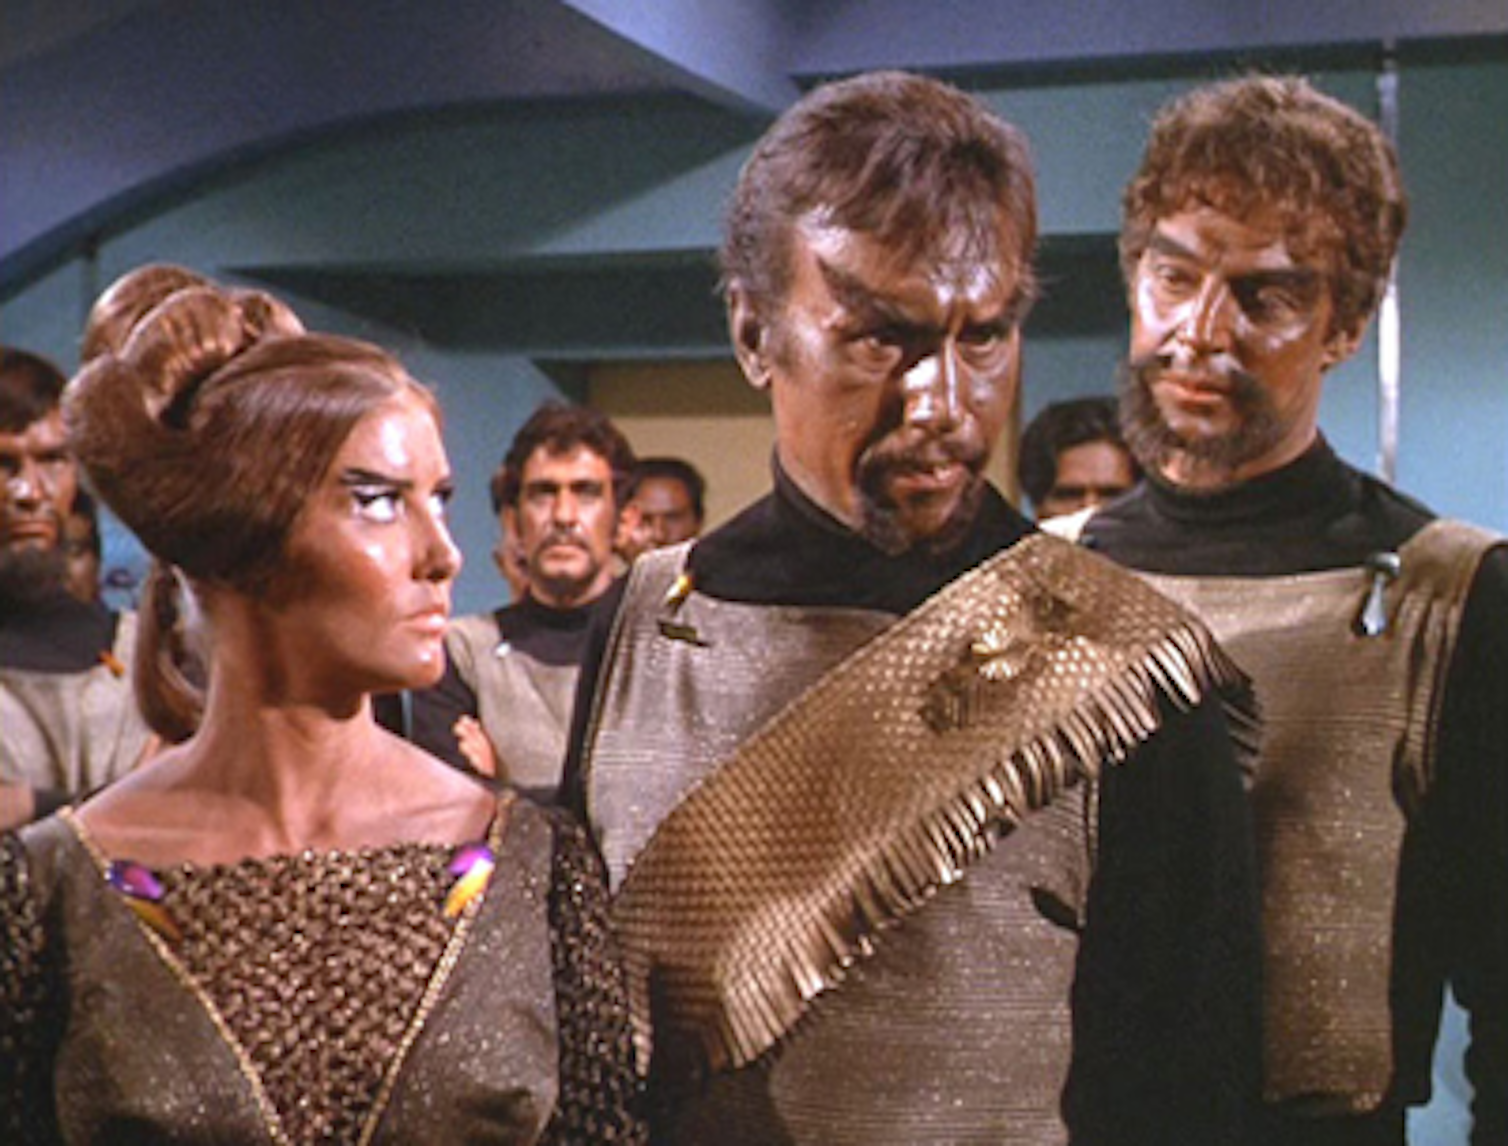 original star trek klingon episodes